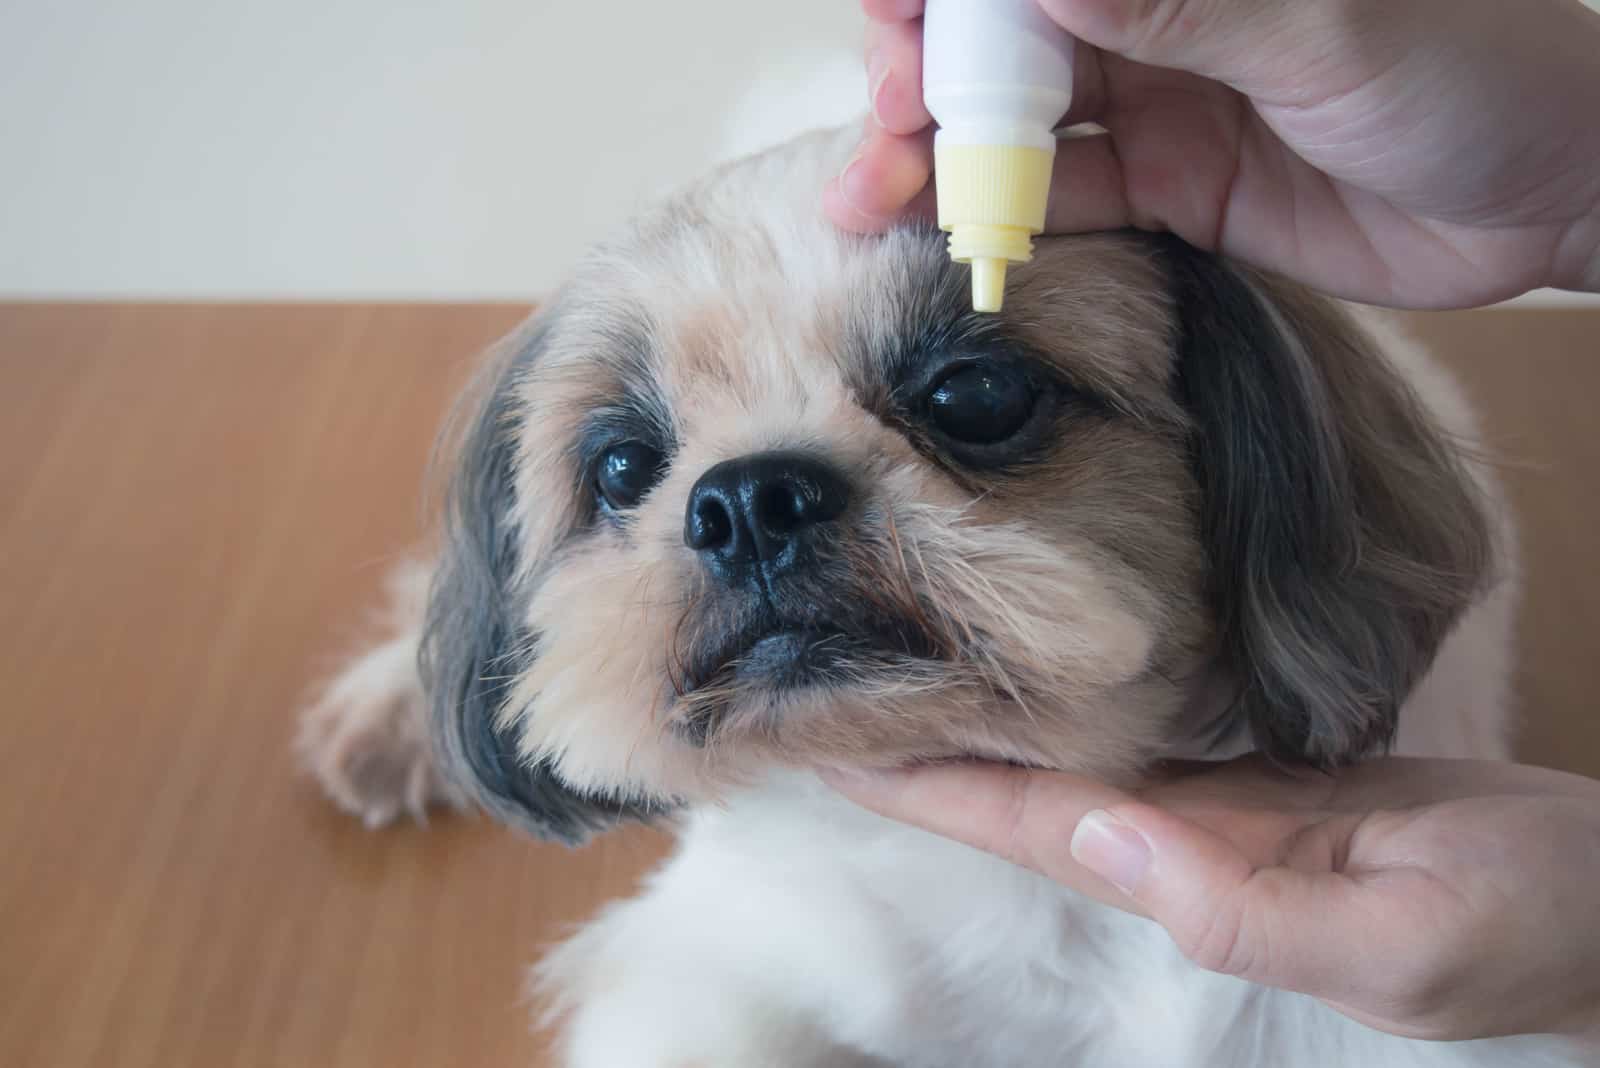 veterinarian hand applying medical eye drops to Shih Tzu dog's eyes